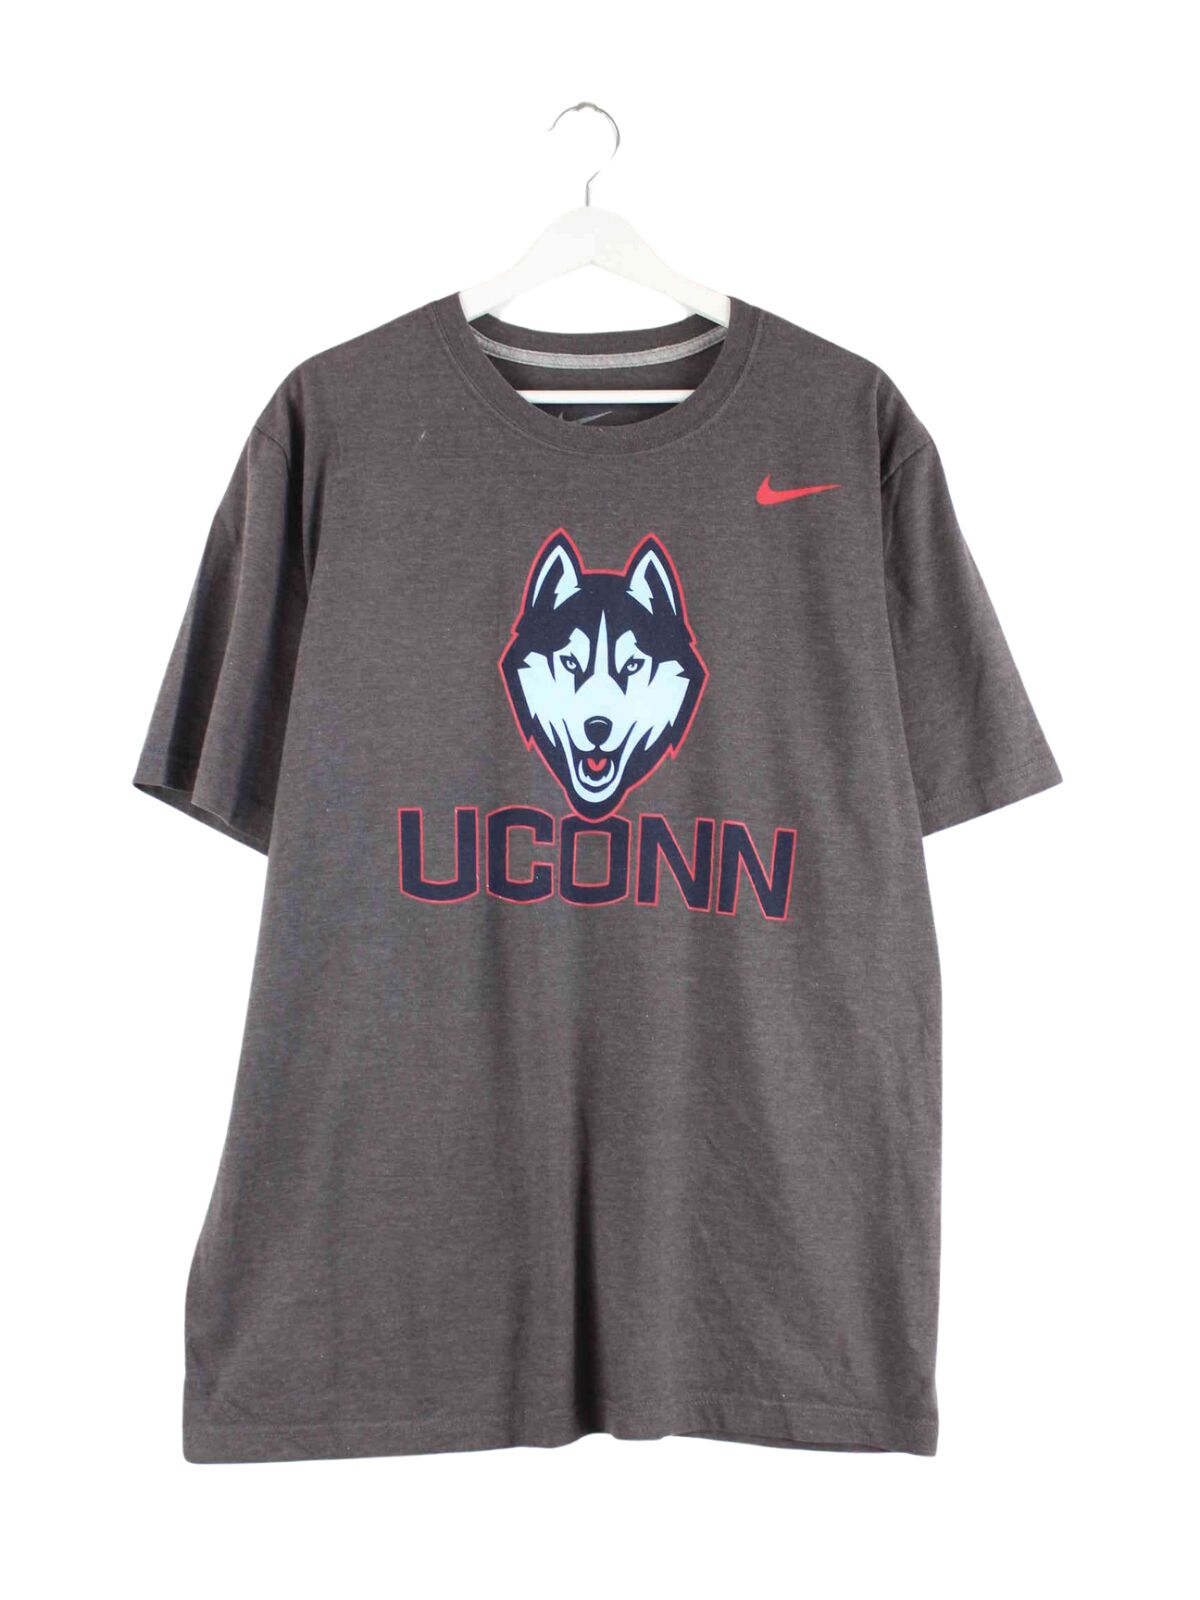 Nike UCONN Wolf Print T-Shirt Grau XL (front image)